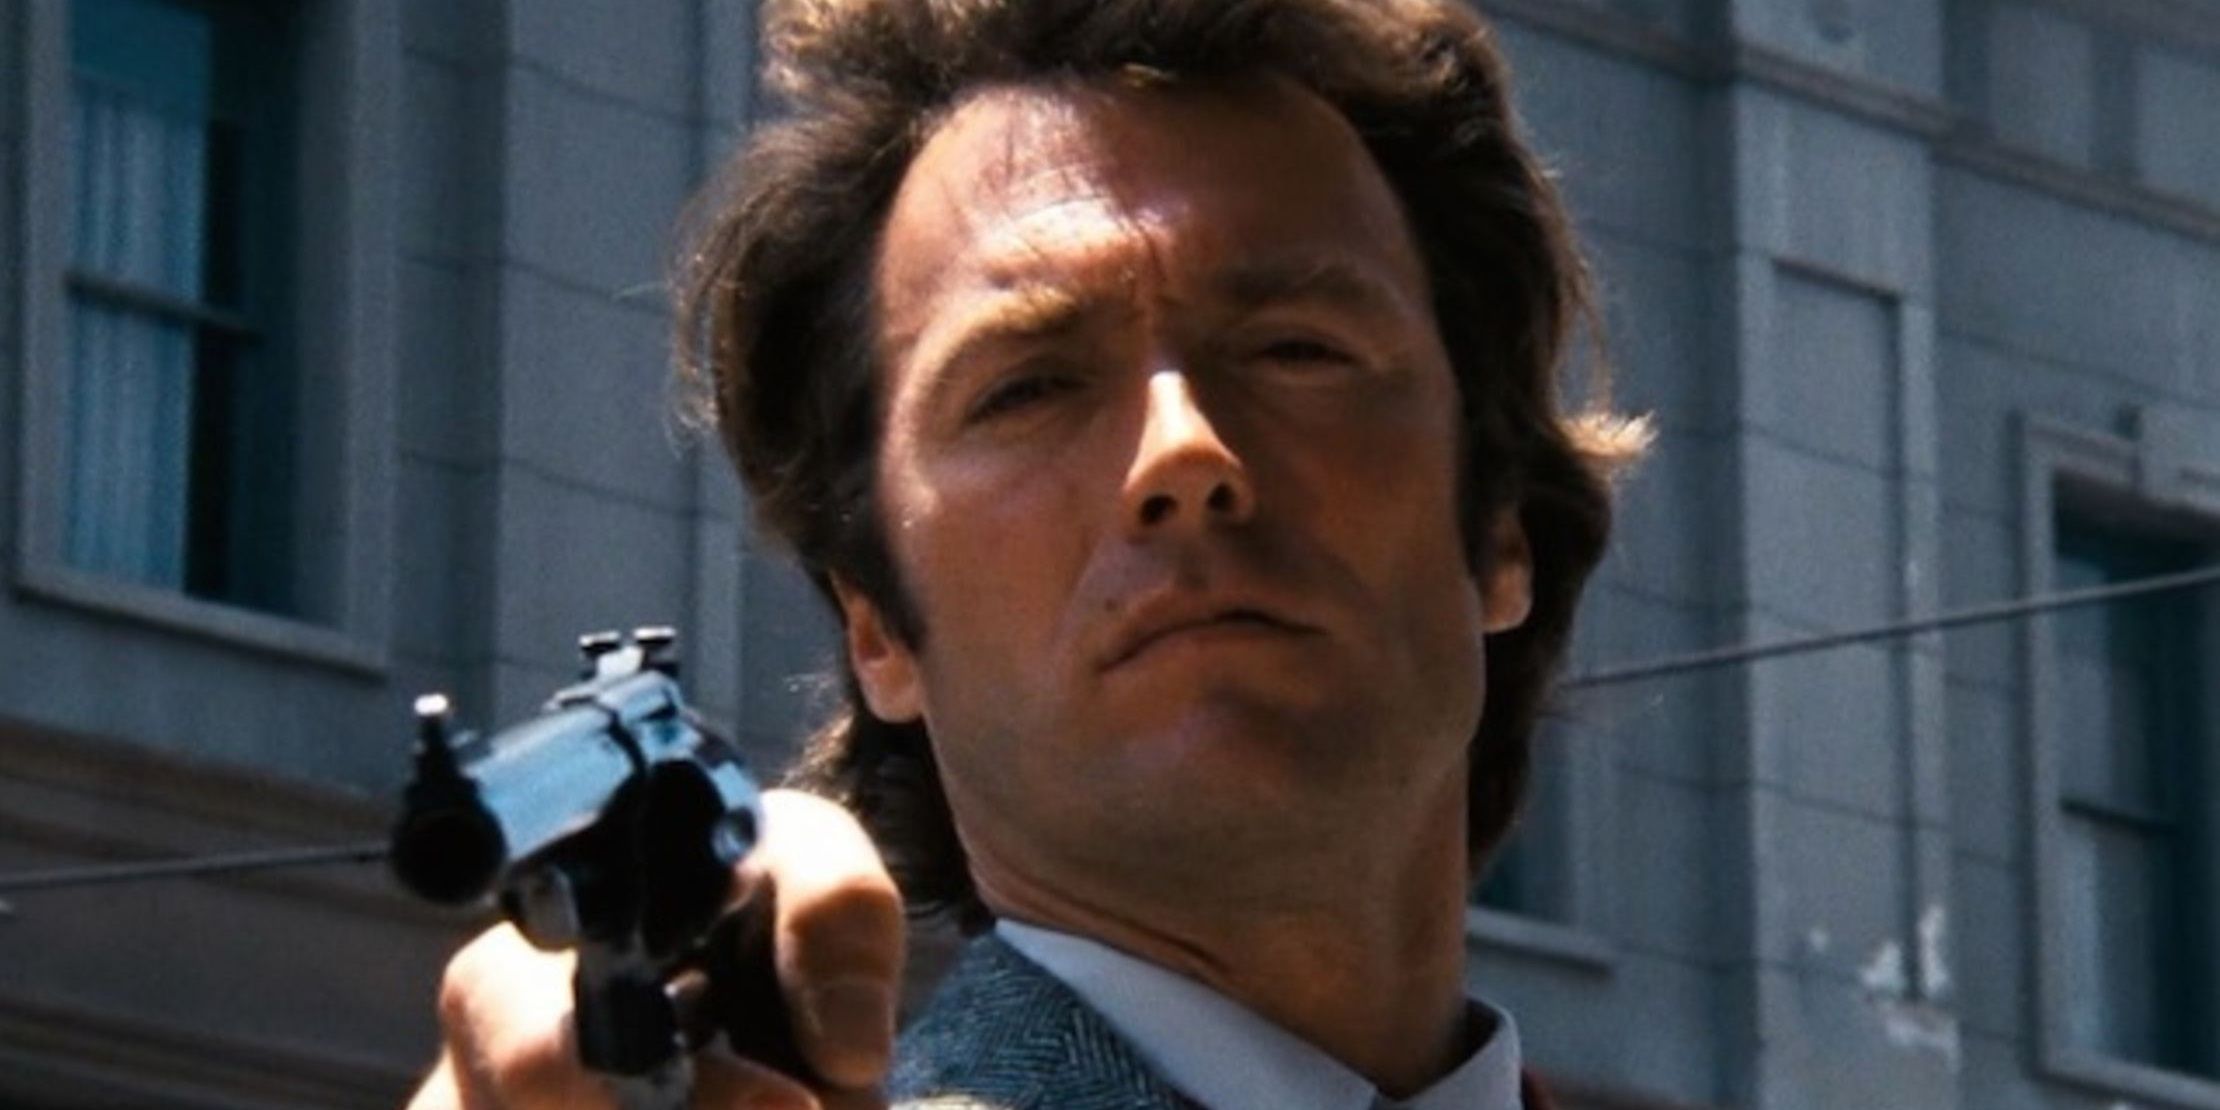 Clint Eastwood's 'Do you feel lucky?' speech in Dirty Harry